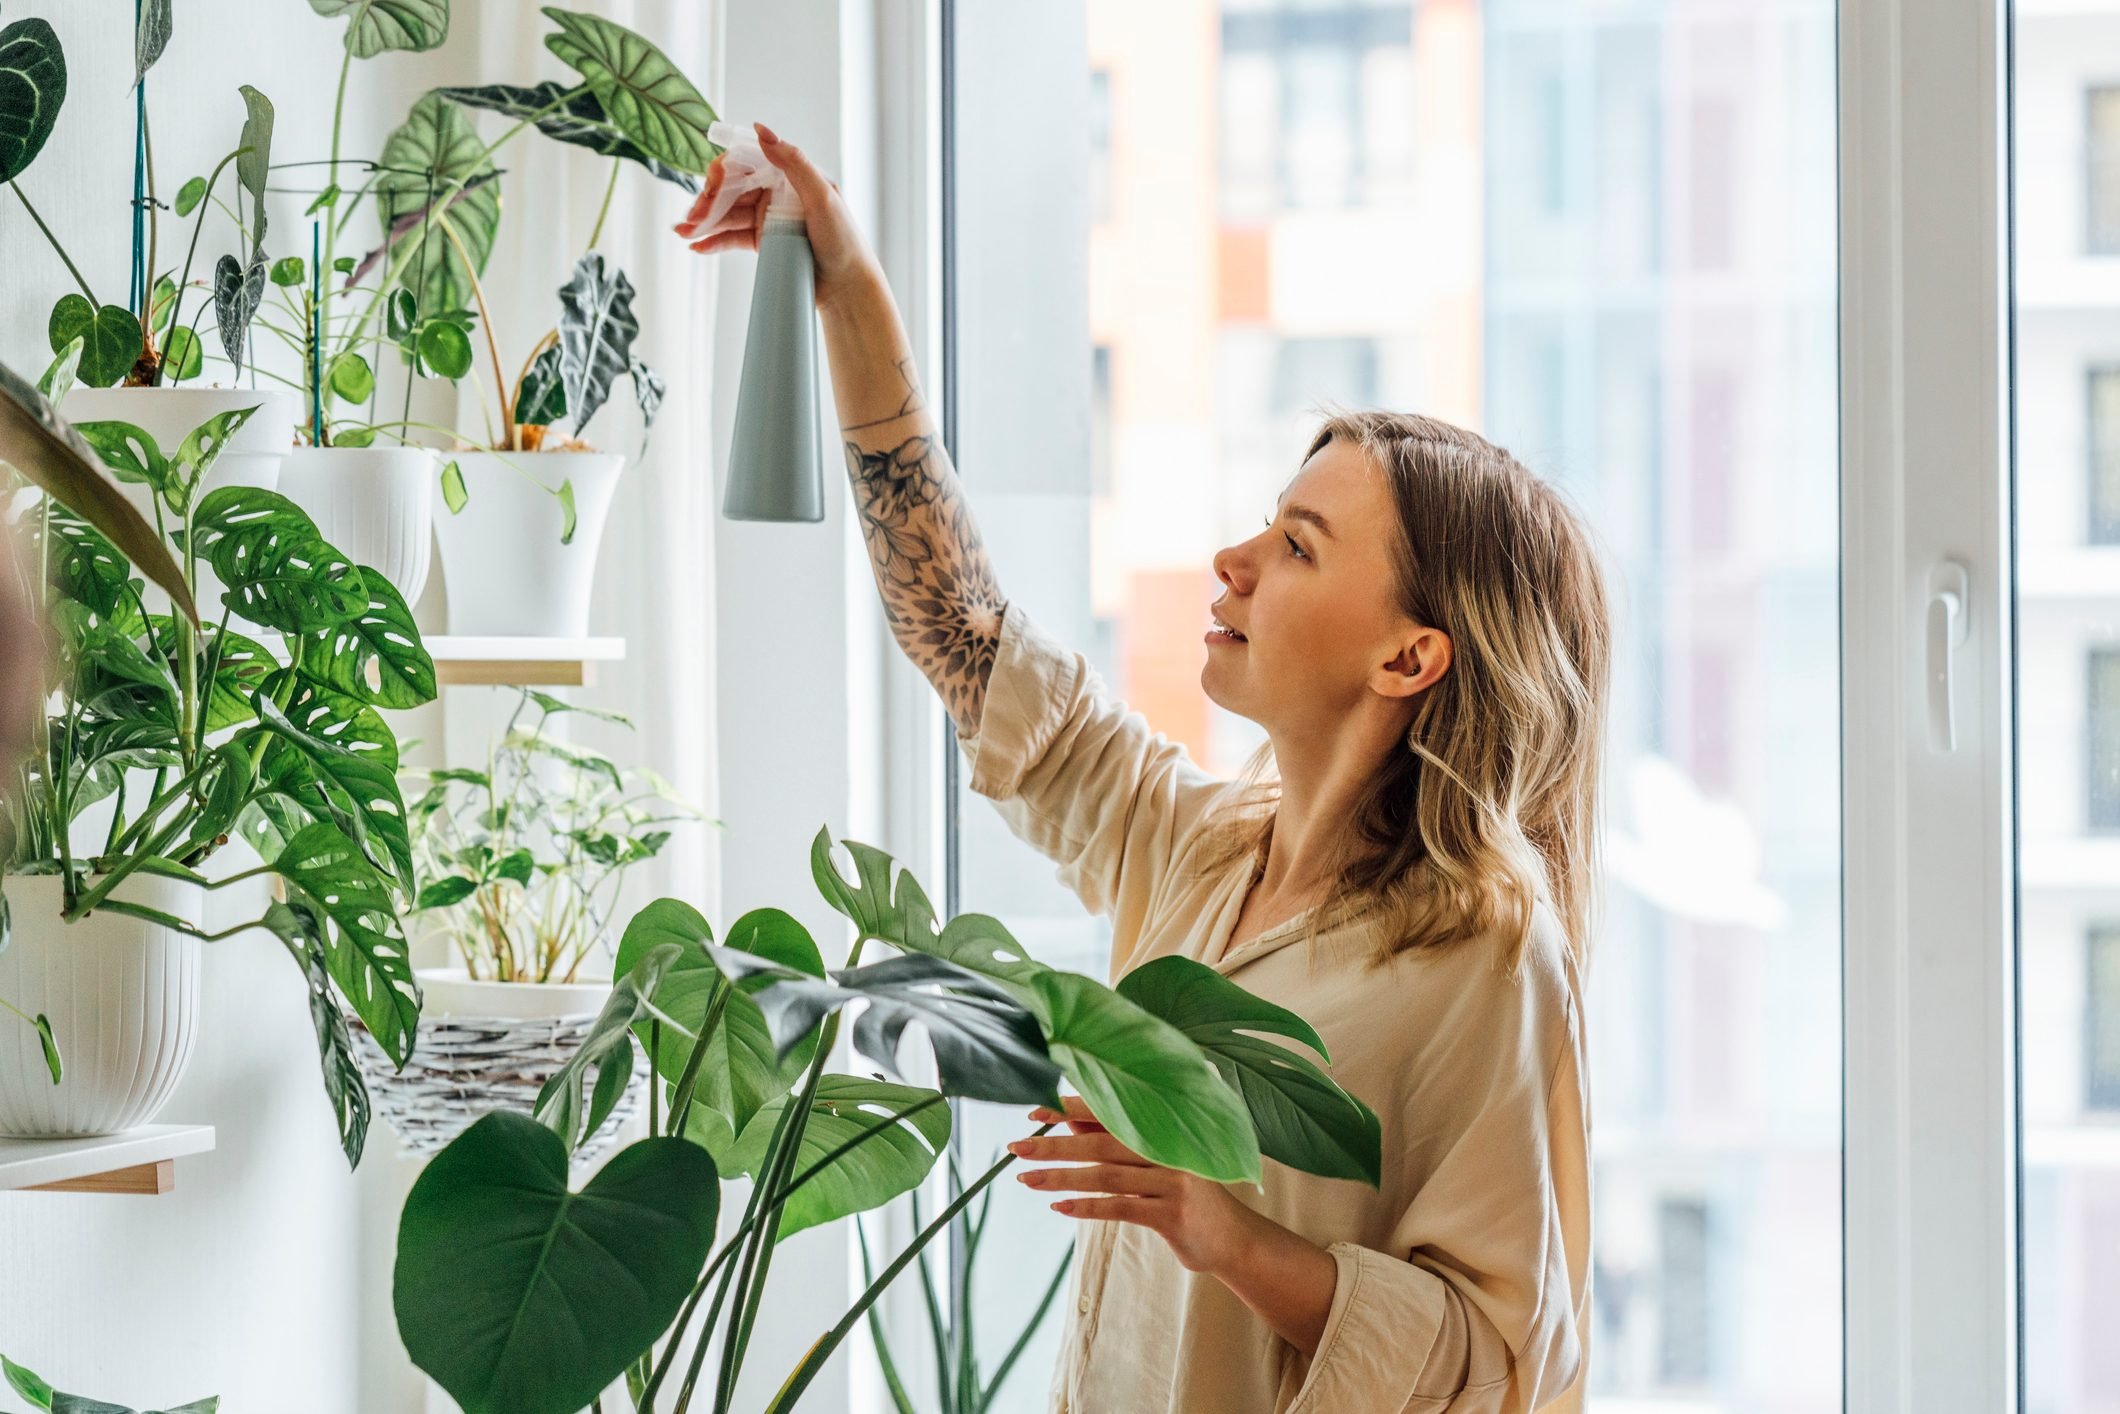 young woman spraying water on houseplants at home|Snake plant|Spider plant|Aloe vera|Pothos|Lavender|Basil|Lemon Balm|Spearmint